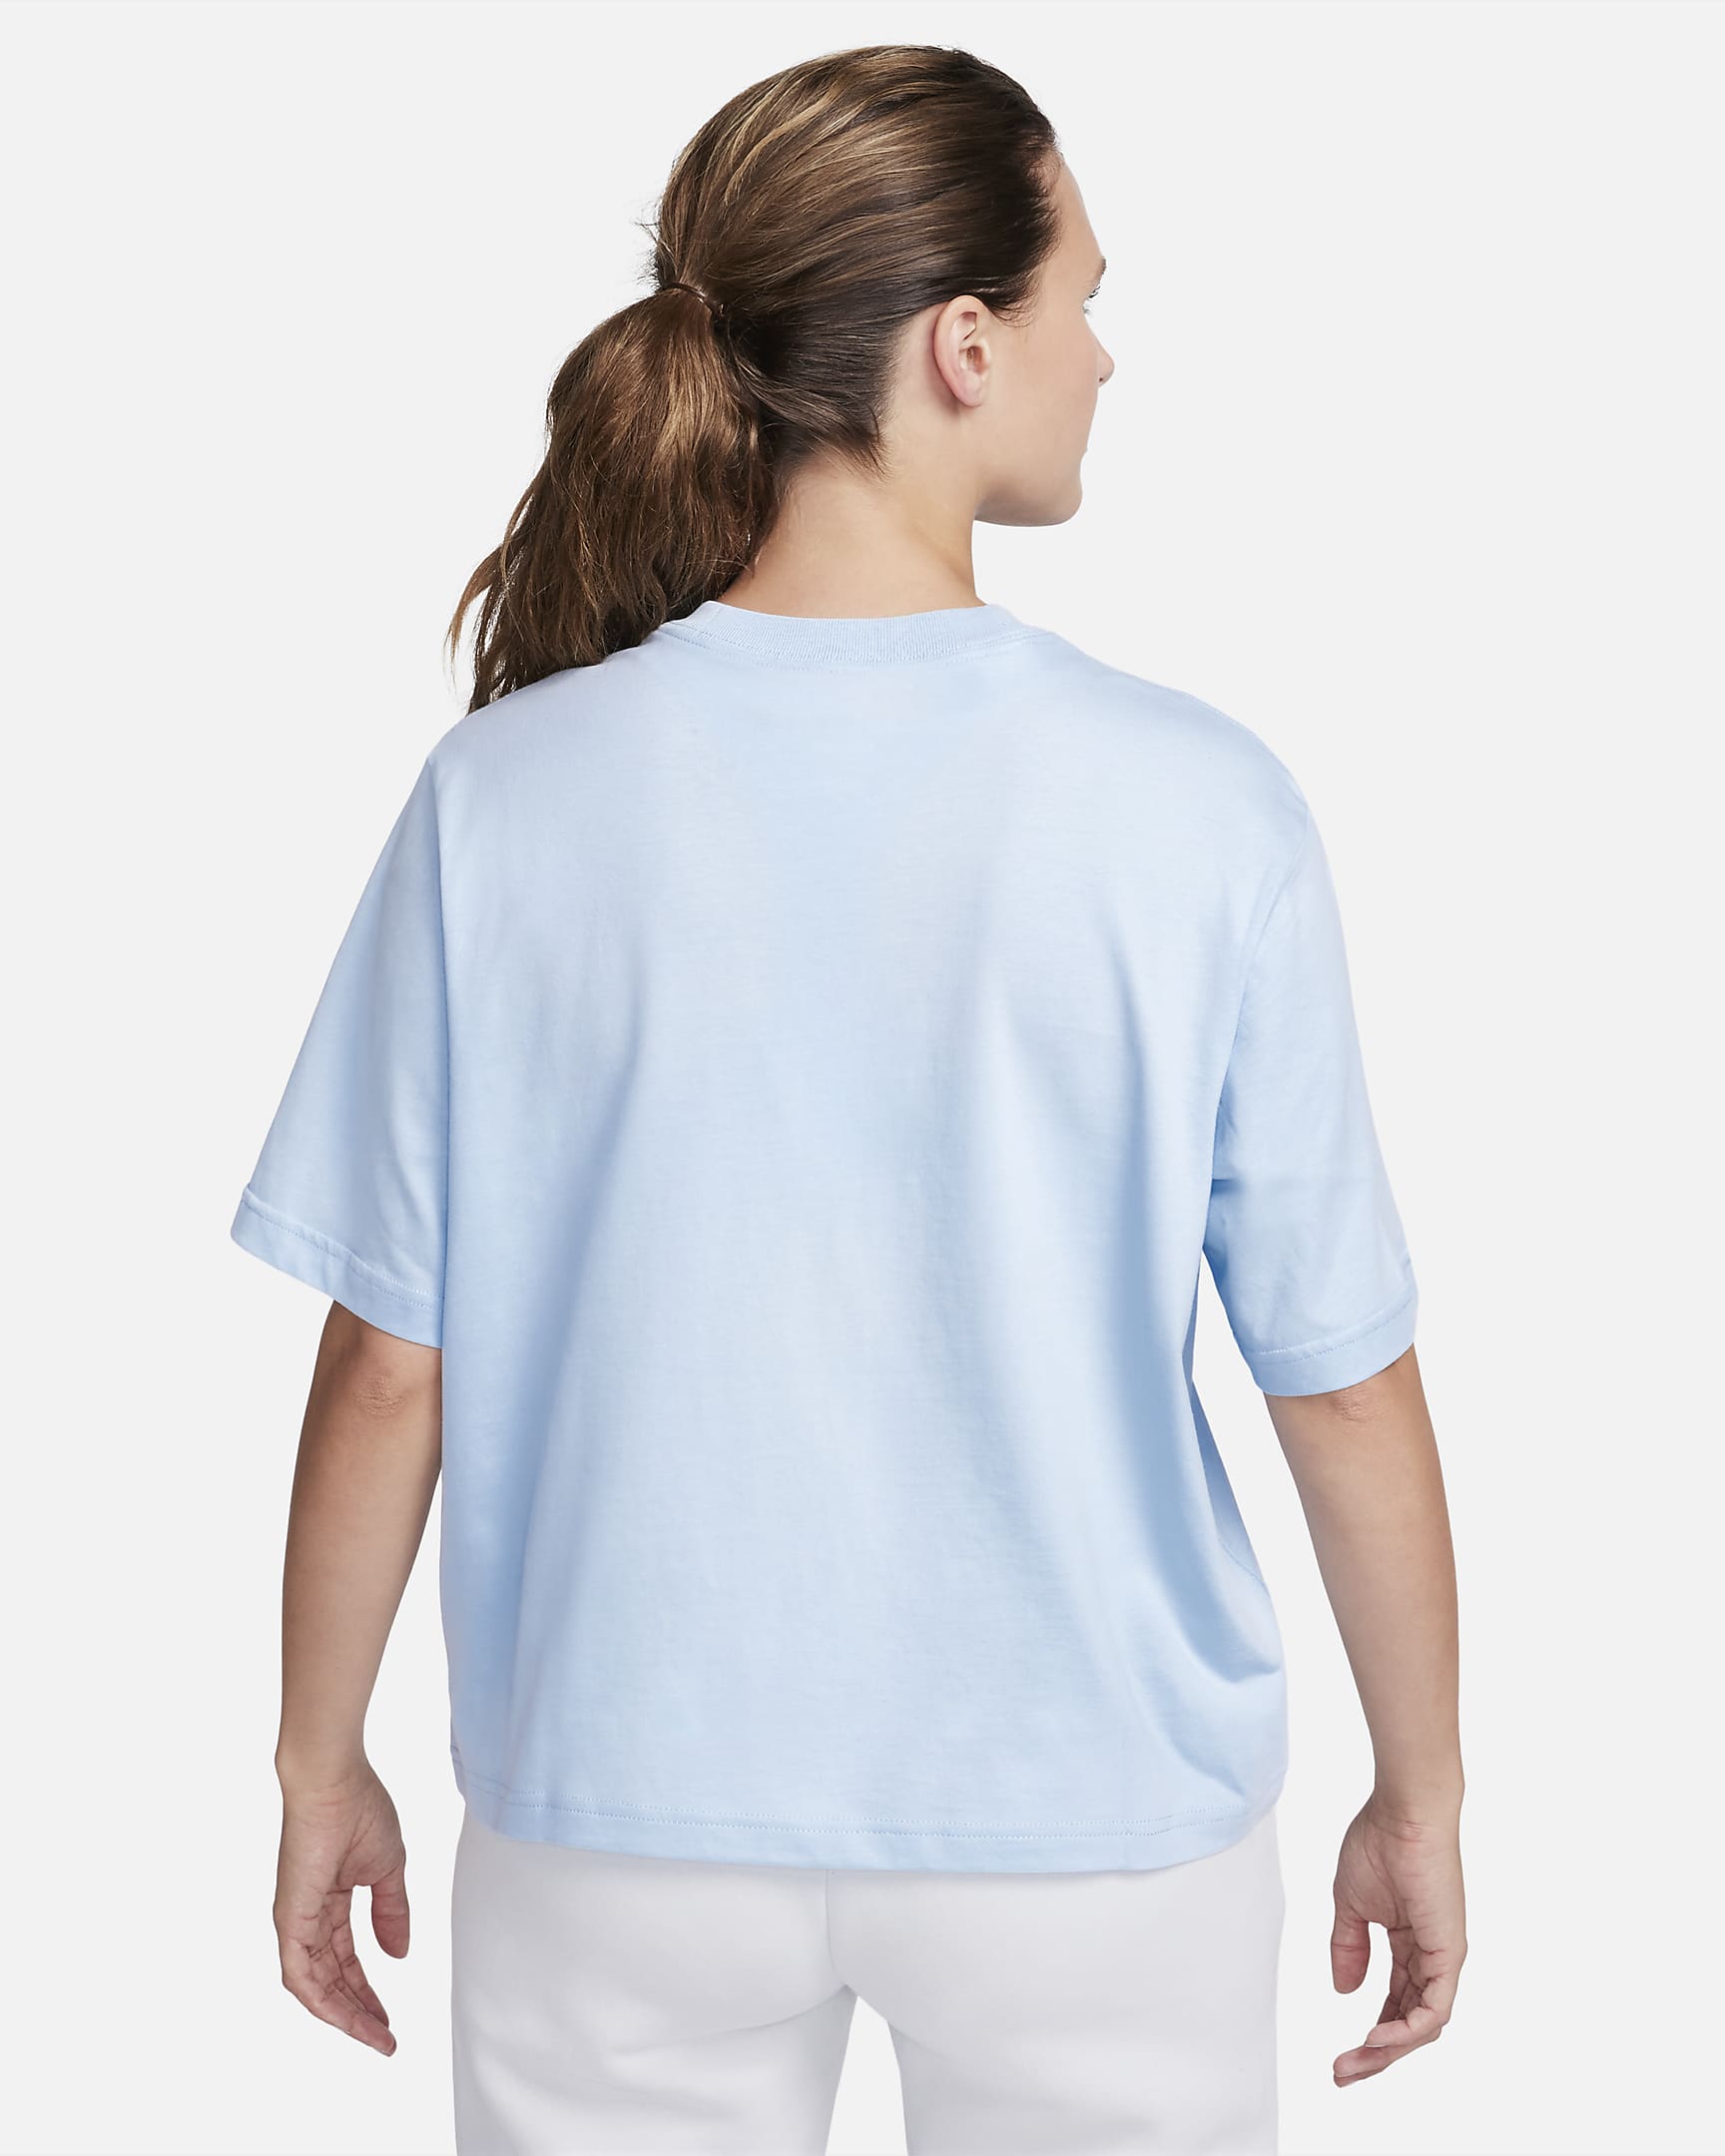 England Women's T-Shirt. Nike.com